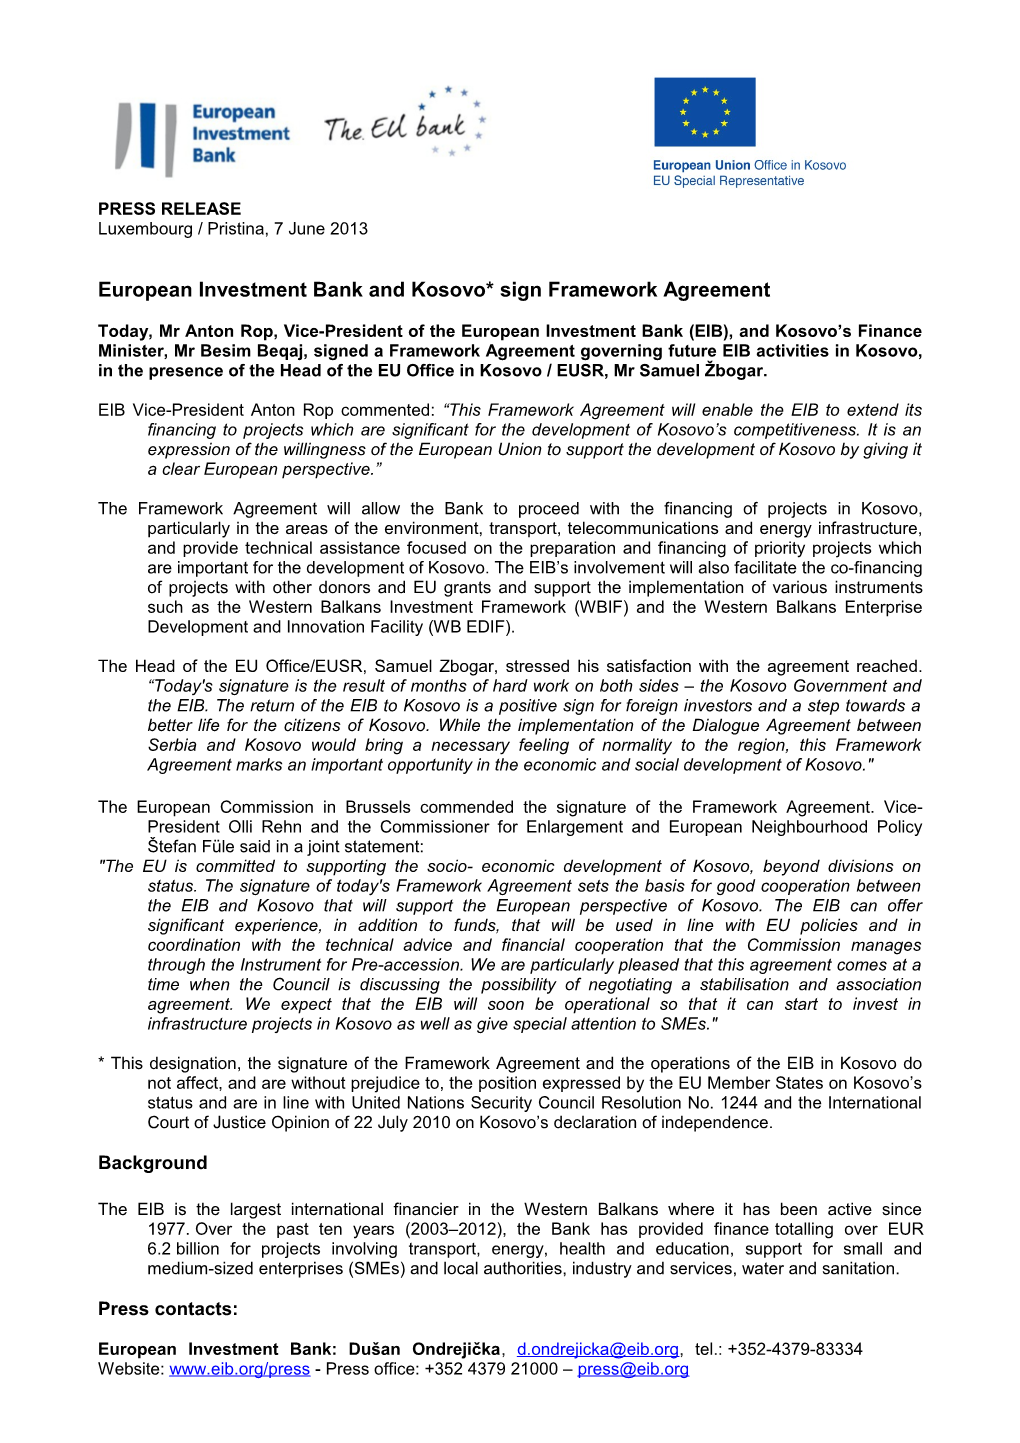 European Investment Bank and Kosovo* Sign Framework Agreement